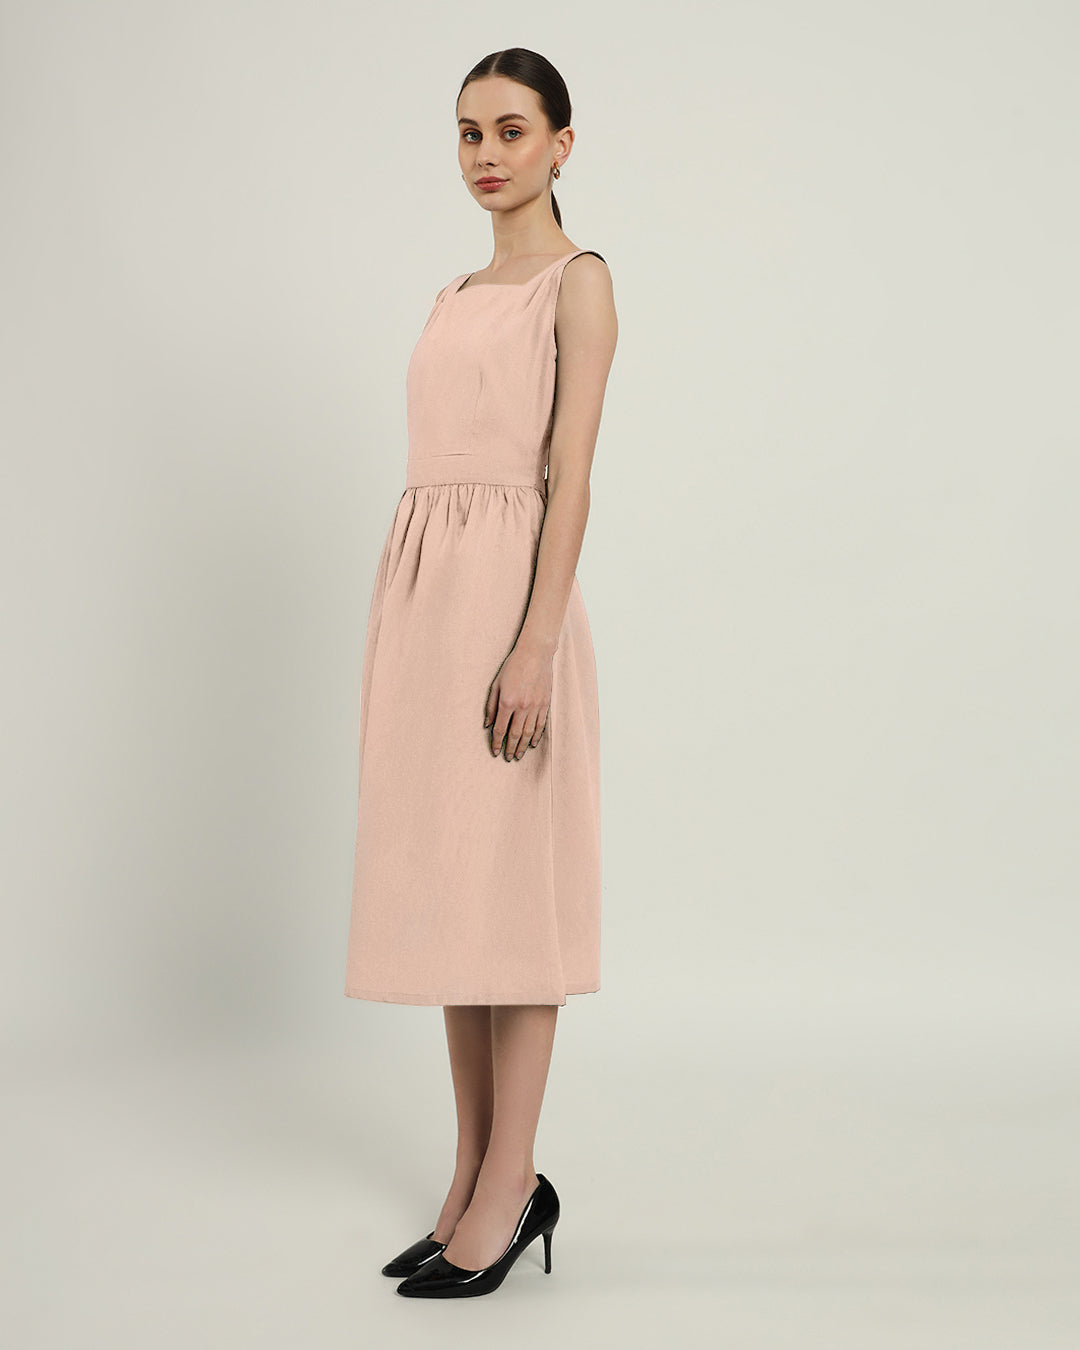 The Mihara Daisy Bisque Linen Dress